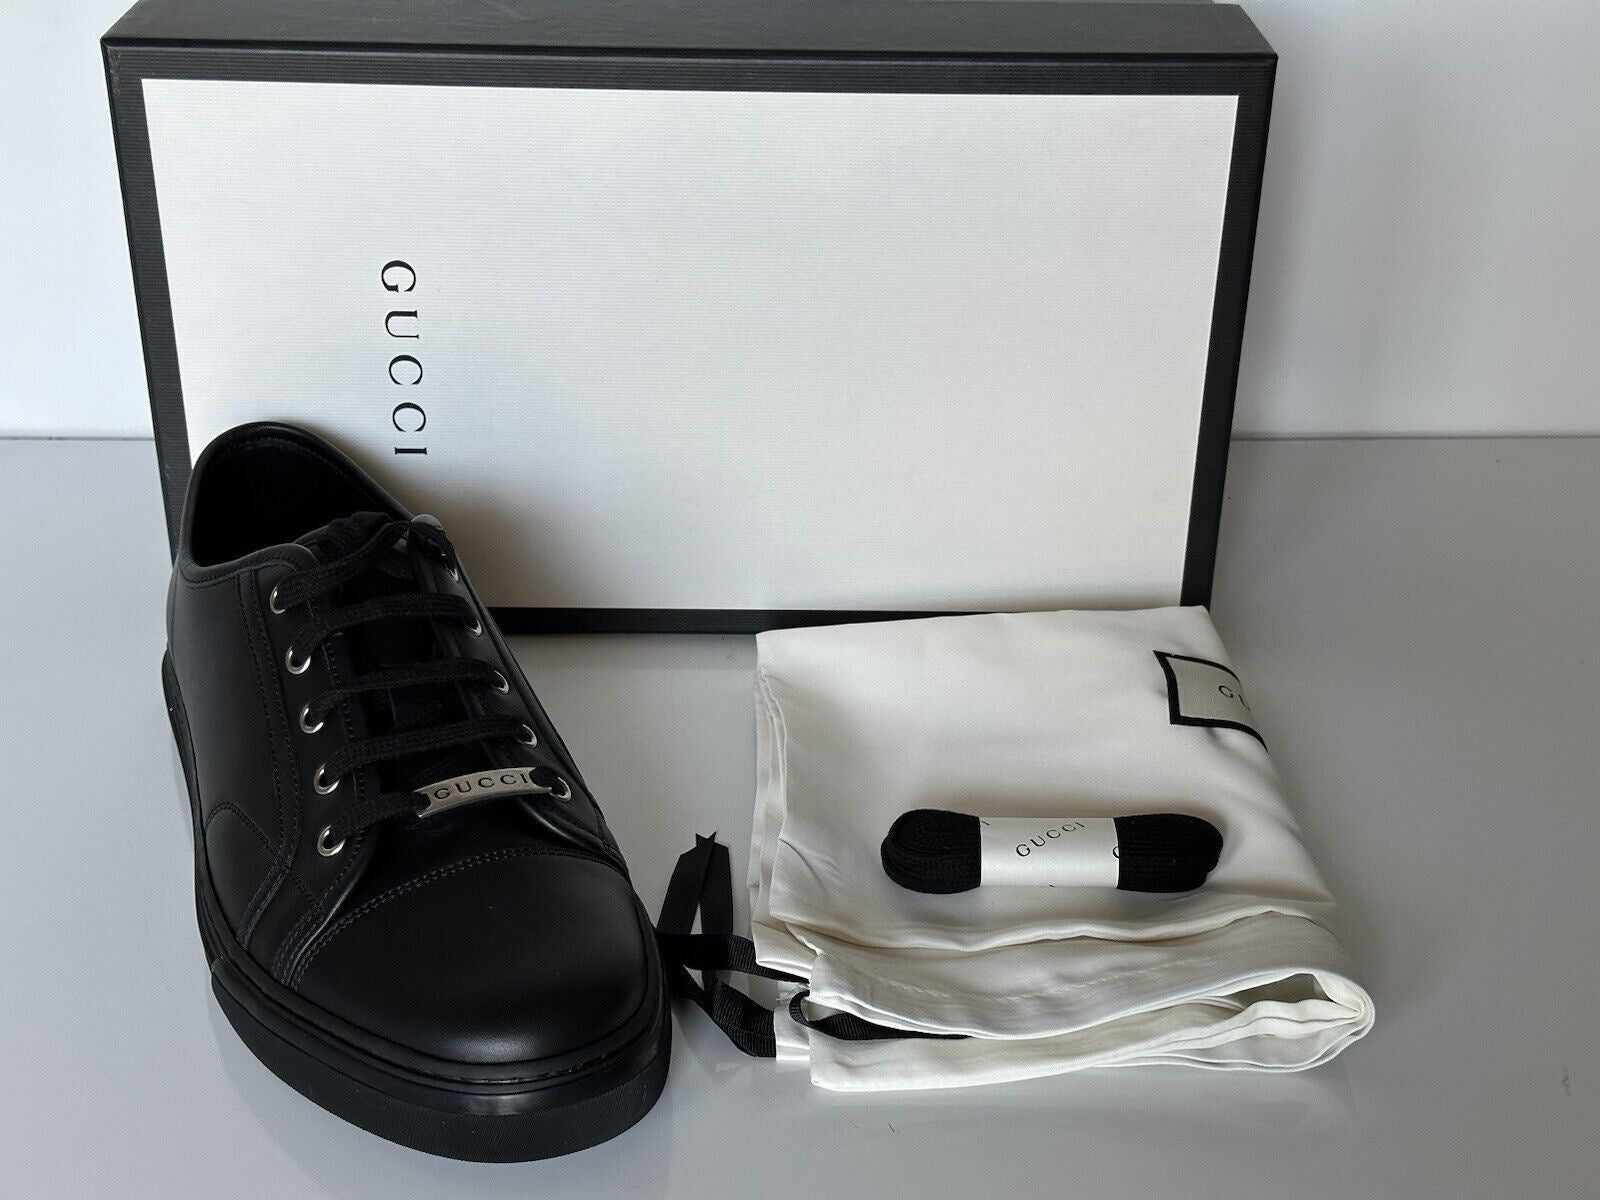 Gucci Men's Low-top Black Soft Leather Sneakers 10.5 US (Gucci 10) 423301 IT NIB